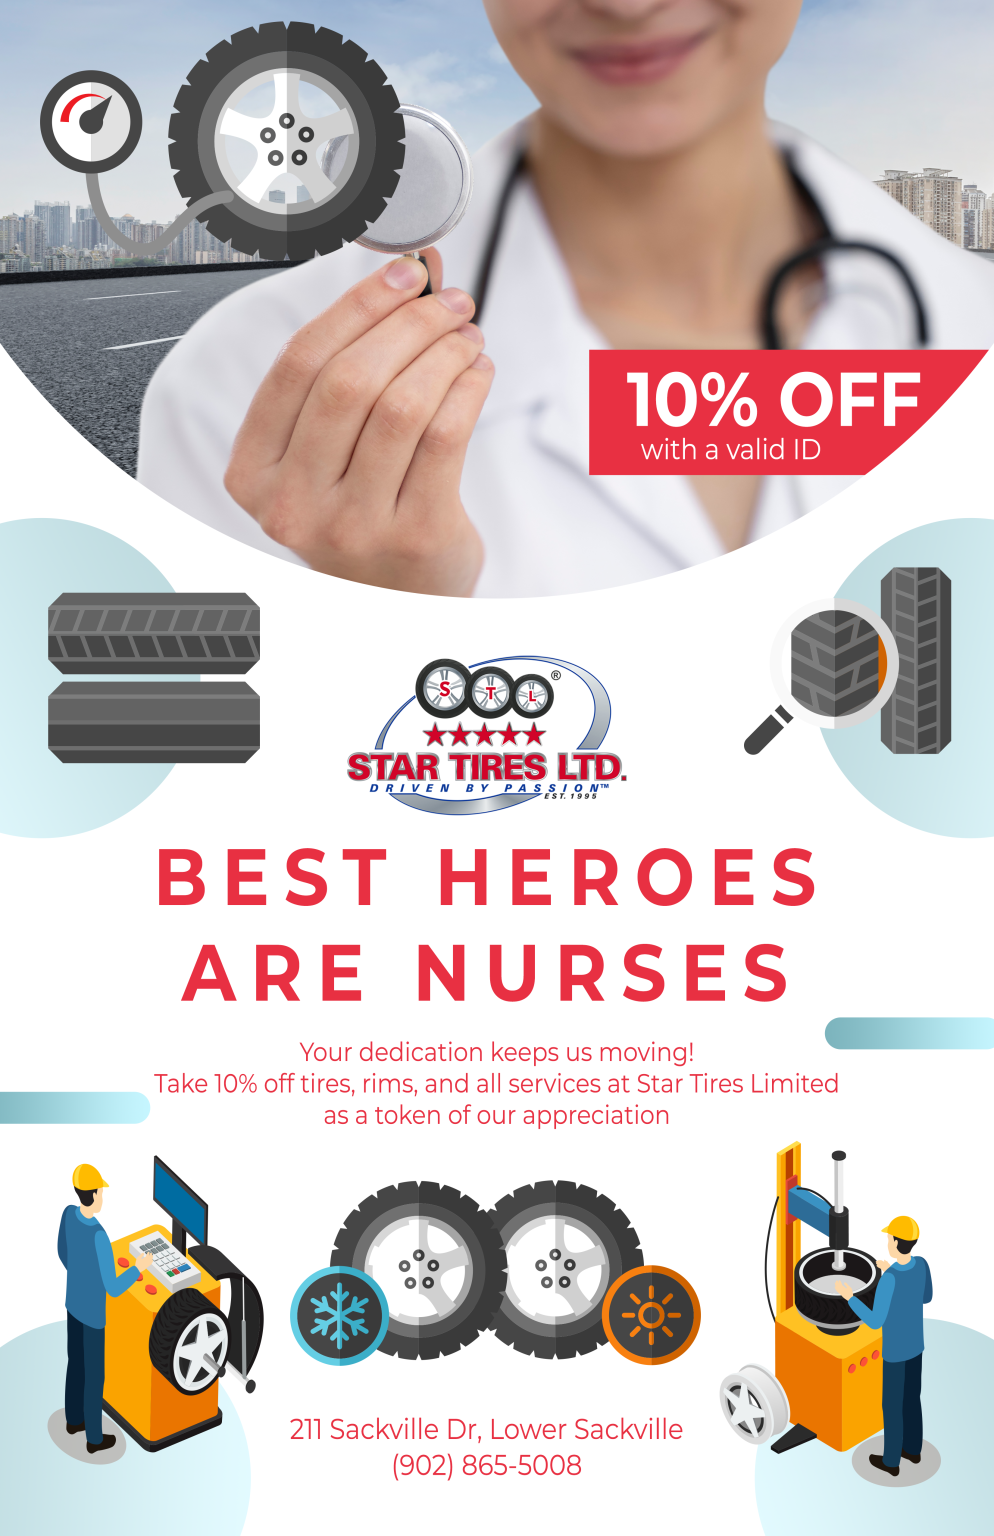 Nurses, your care knows no bounds!